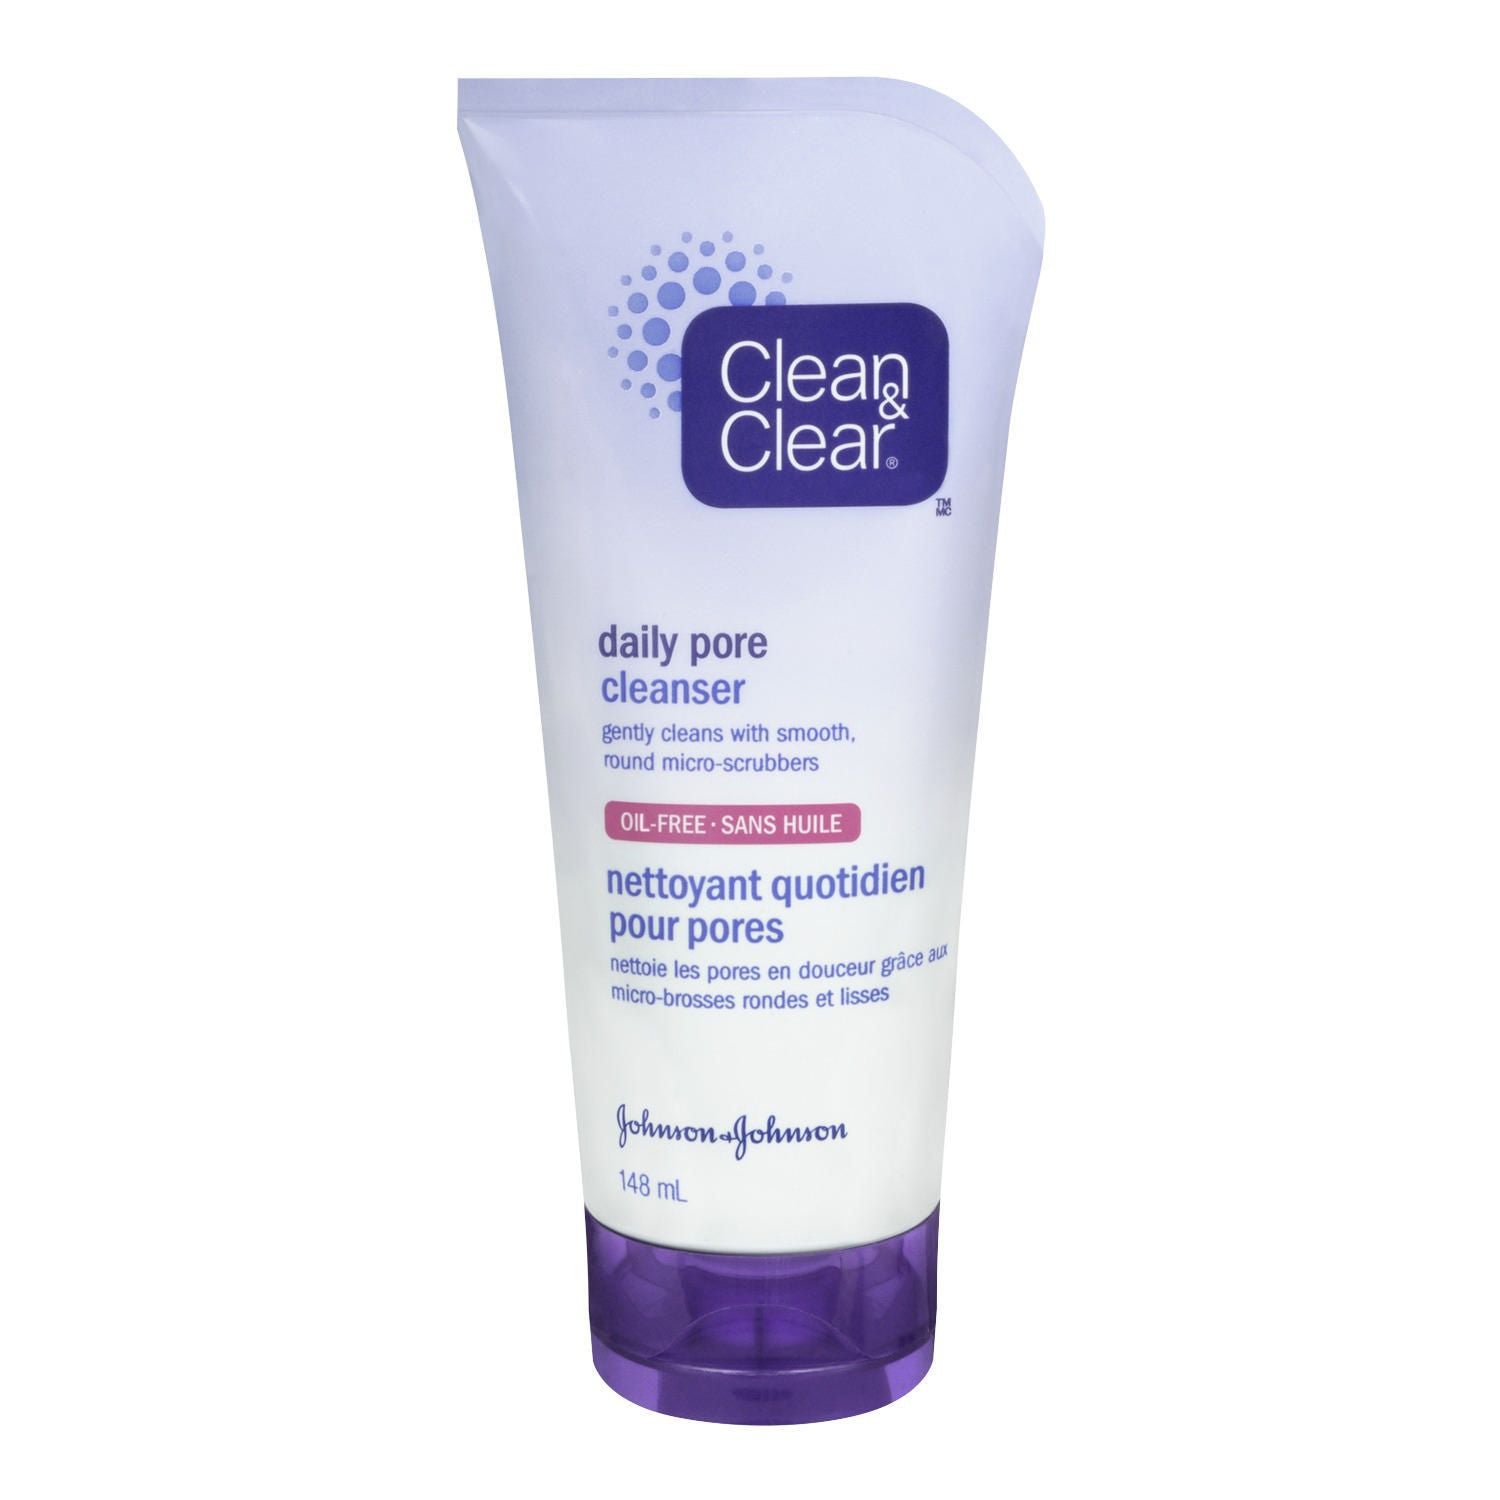 Clean & Clear Daily Pore Cleanser 148ml